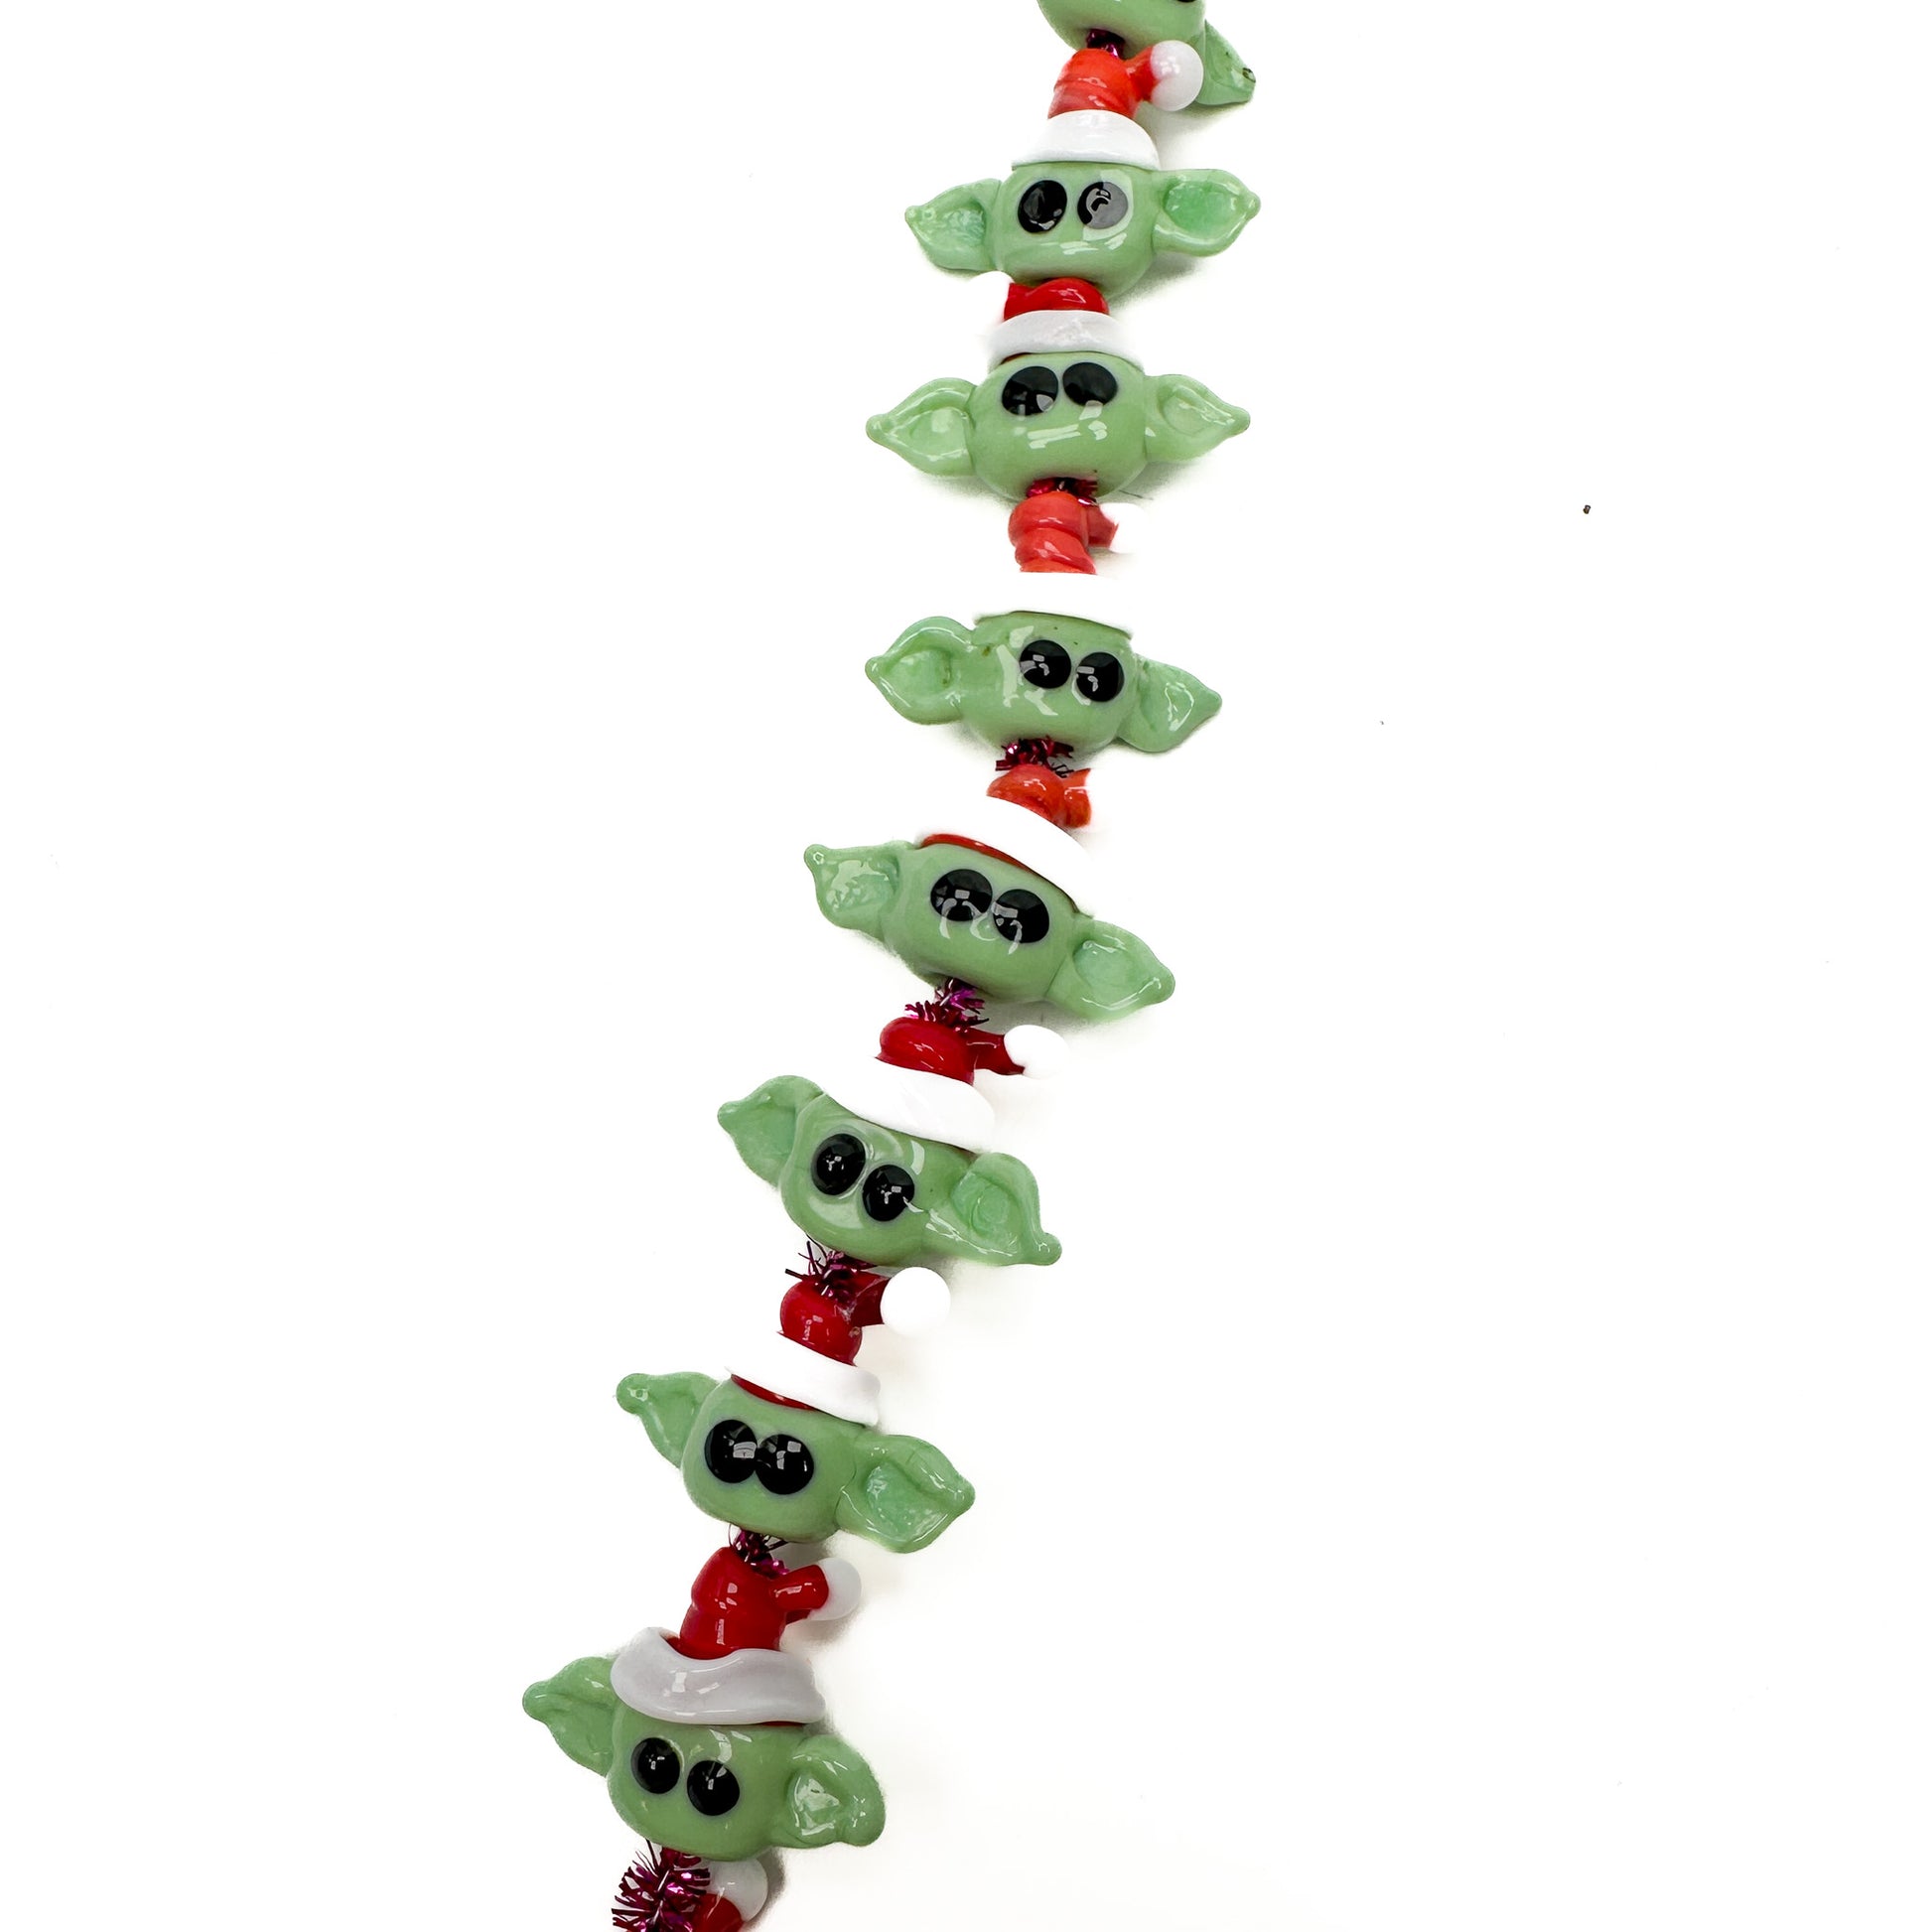 Calvin Orr Holiday Green Santa Troll Glass Bead - 1 pc.-The Bead Gallery Honolulu